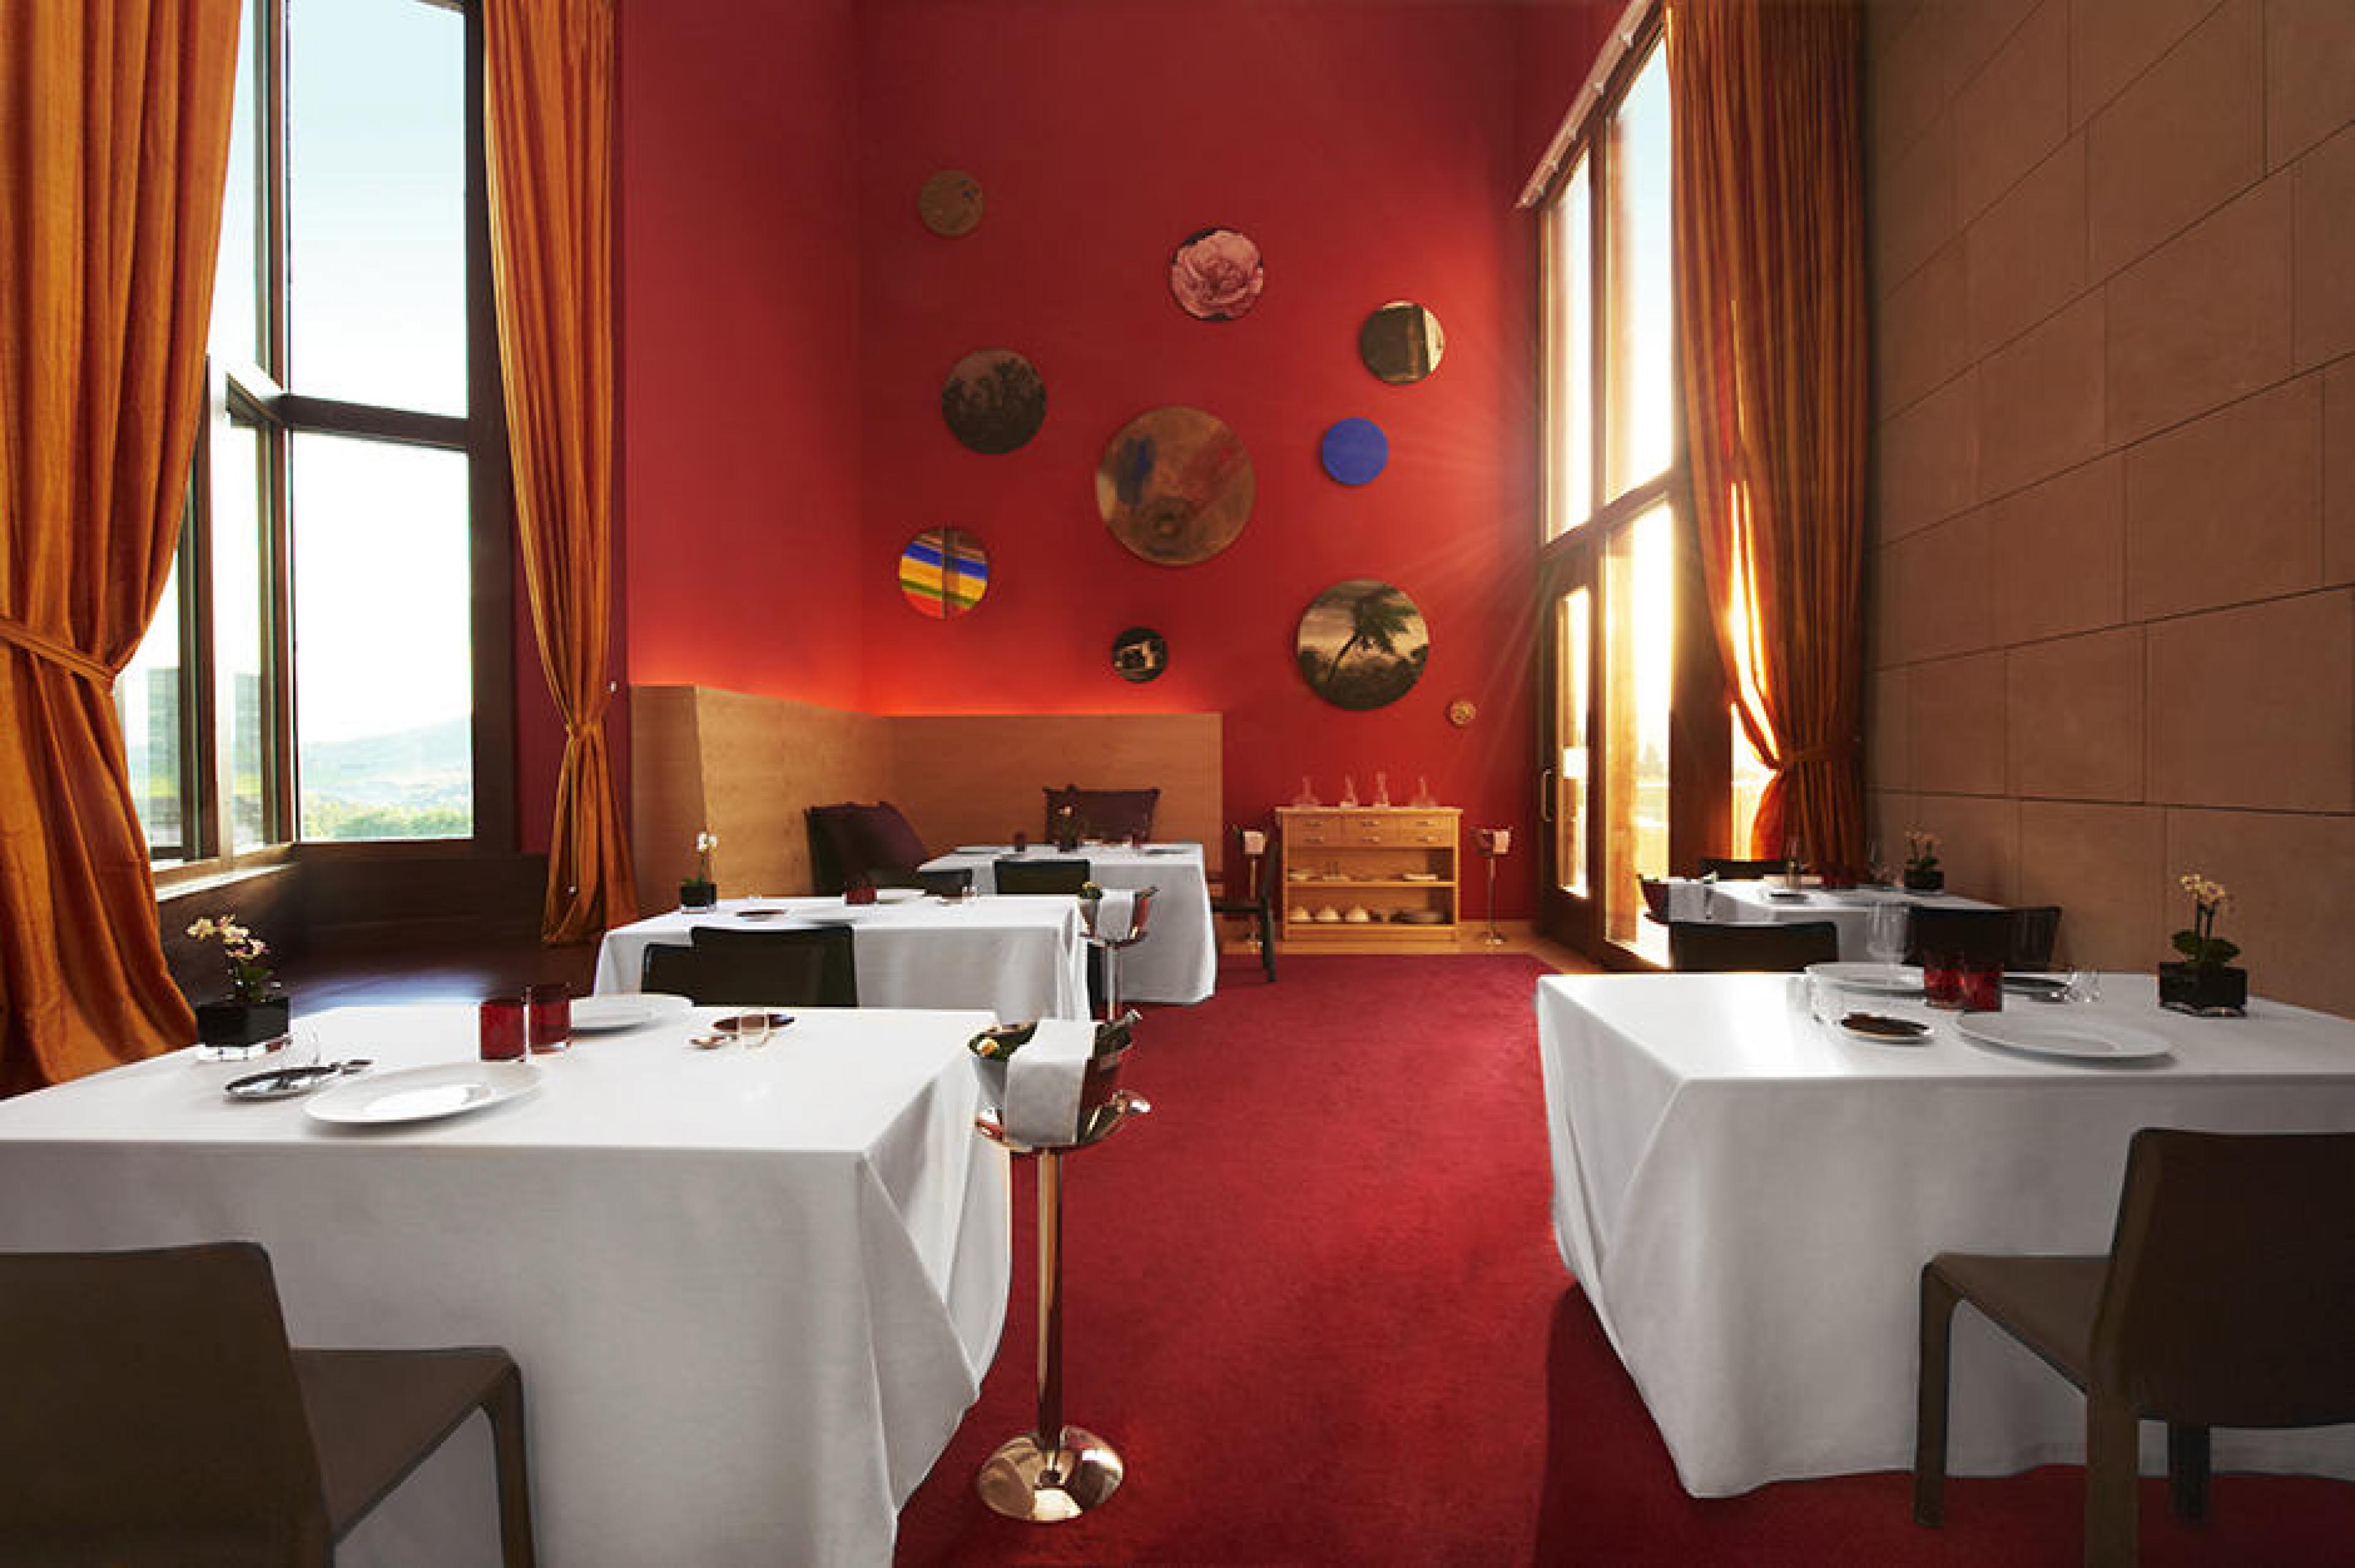 Interiors at Restaurante Marques de Riscal, Rioja, Spain